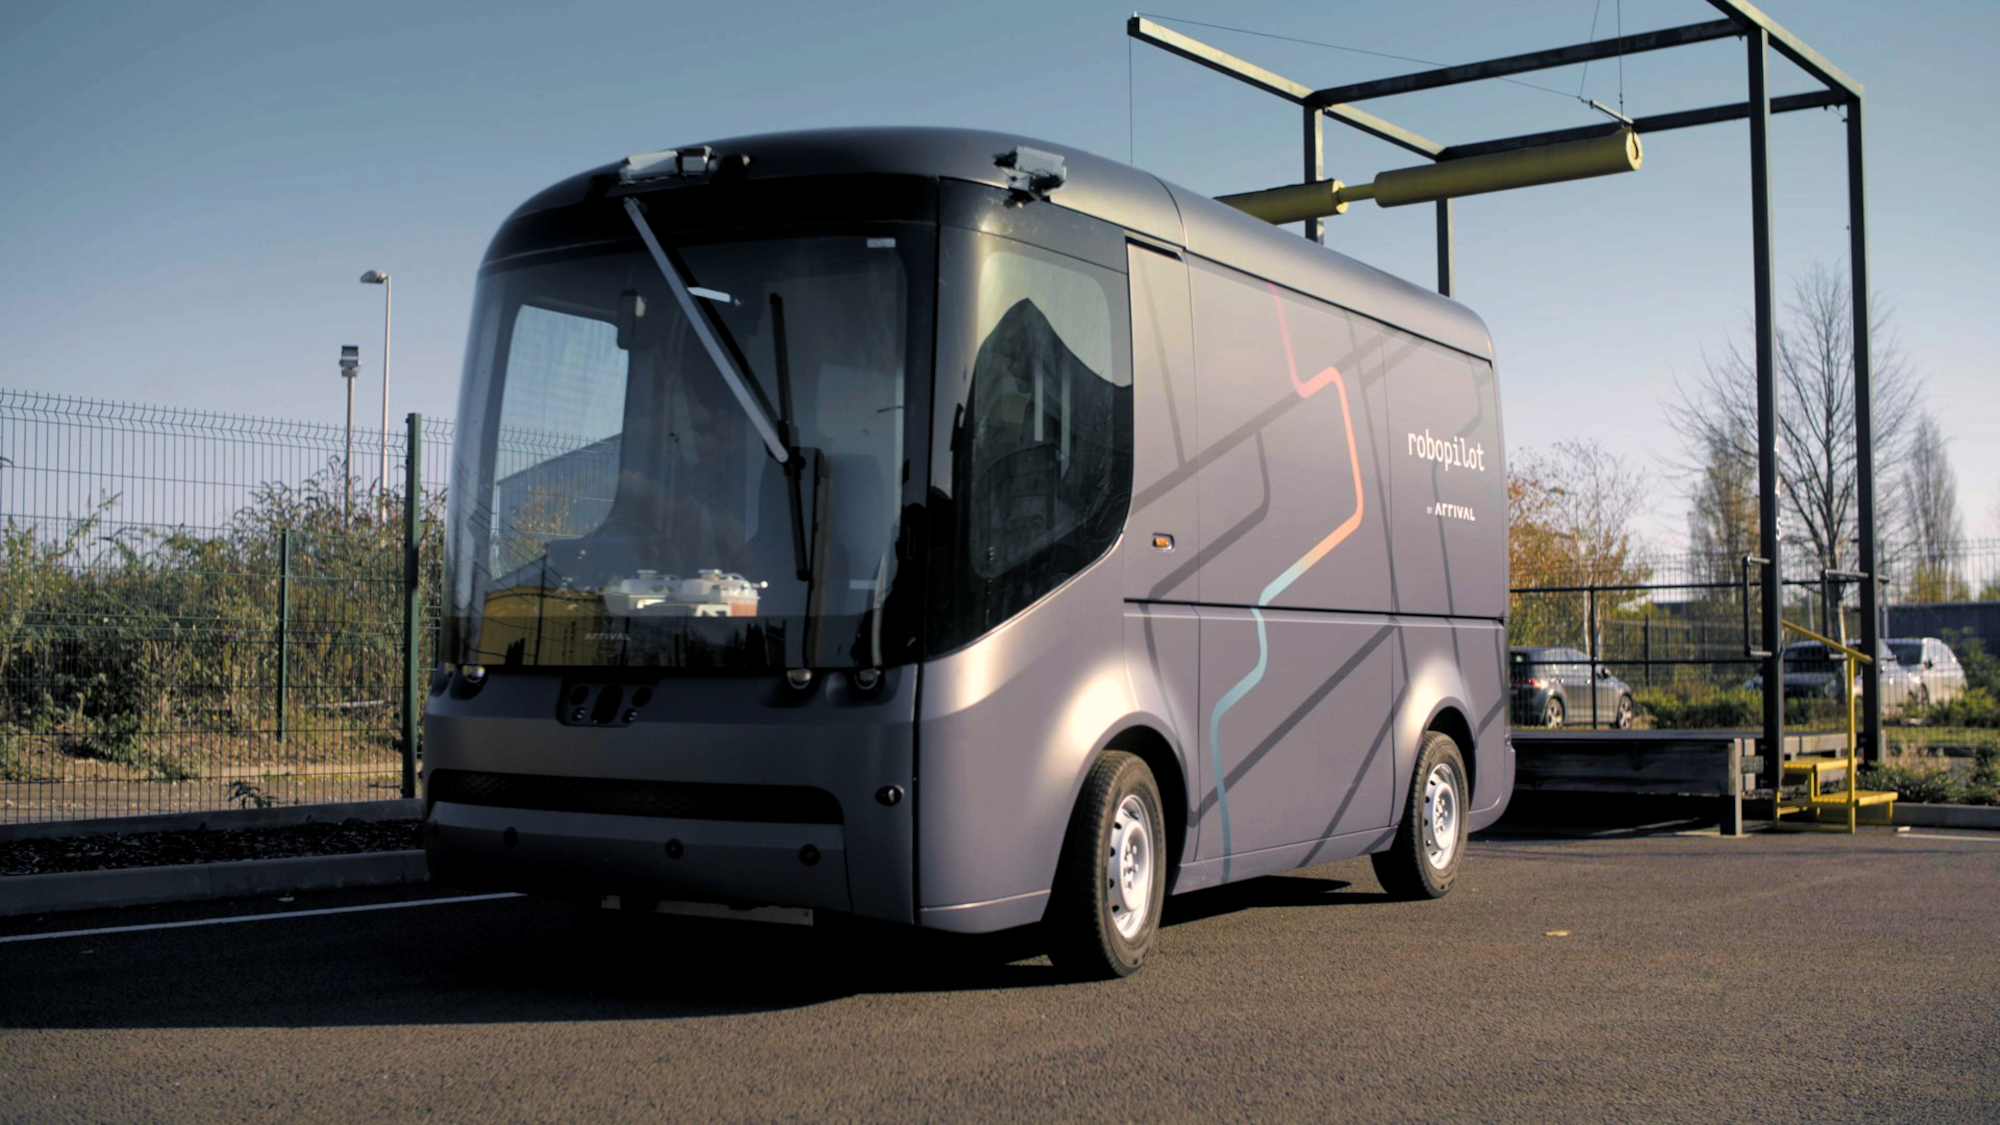 Arrival tests automated driving system autonomous driverless vehicle car truck van